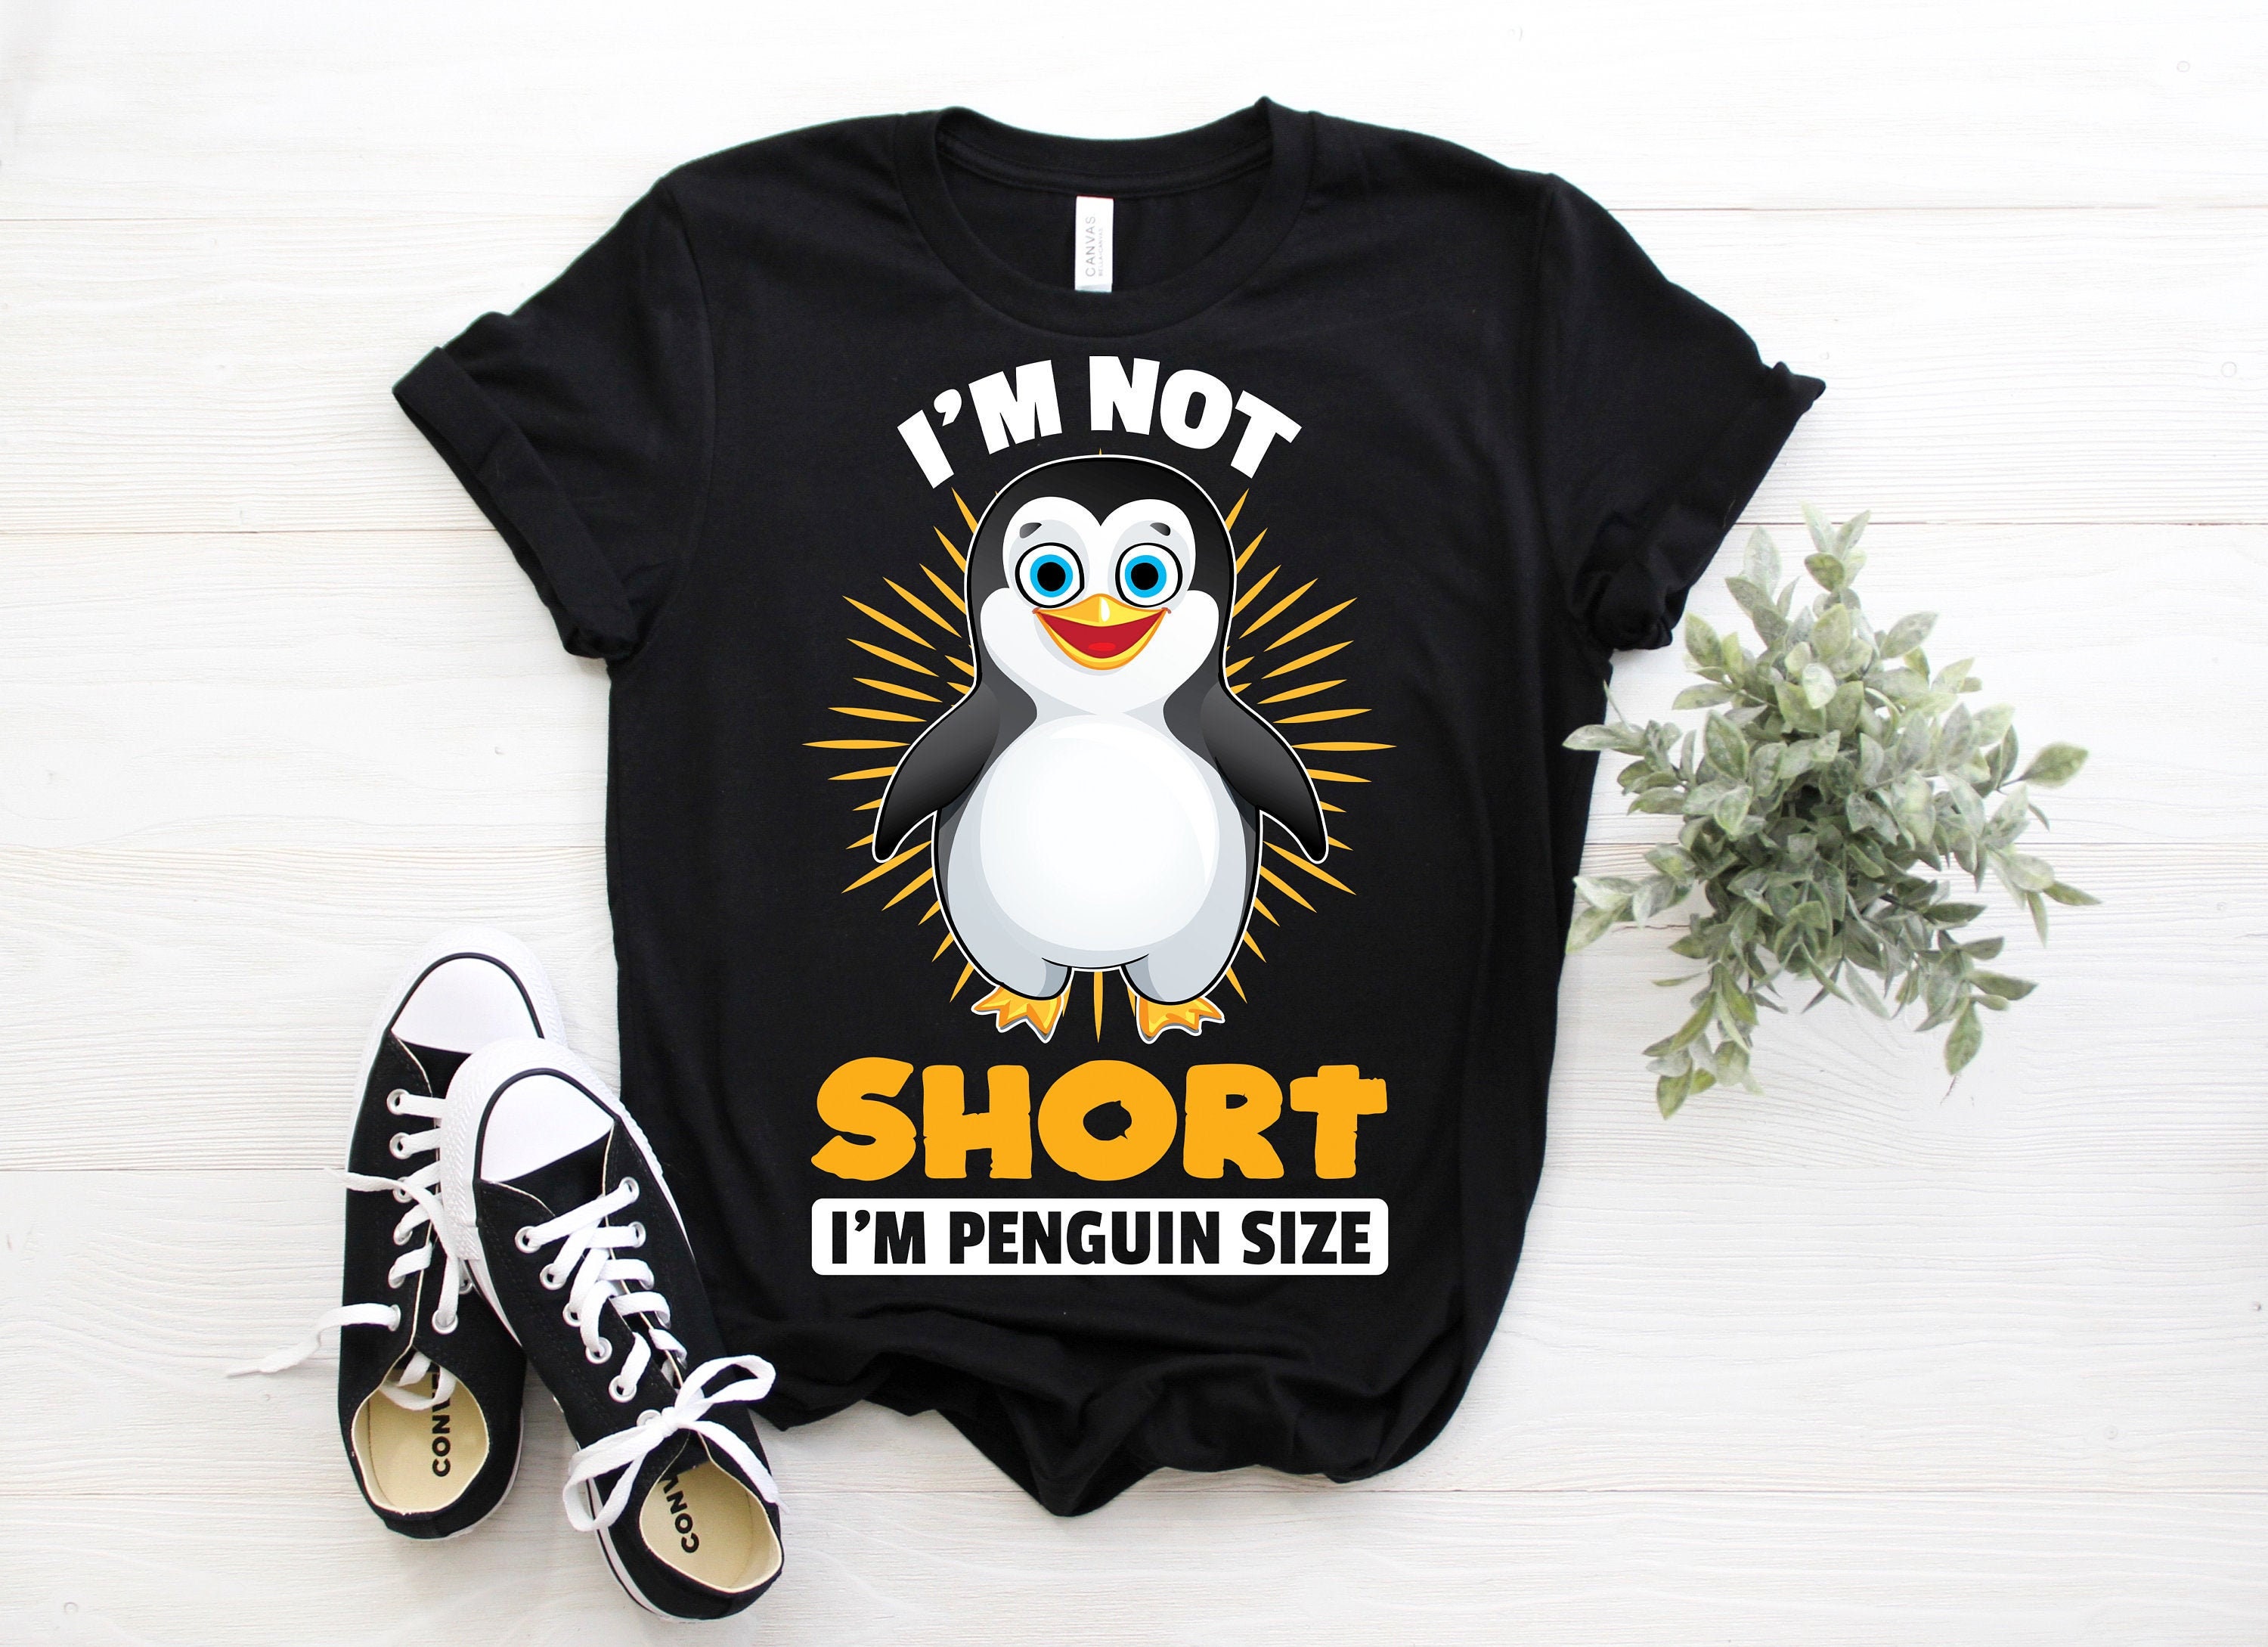 Pittsburgh Penguins Reaper Penguin Halloween Edition NHL Crewneck Sweatshirt  Hoodie Shirt Gifts for Fans - Bluefink